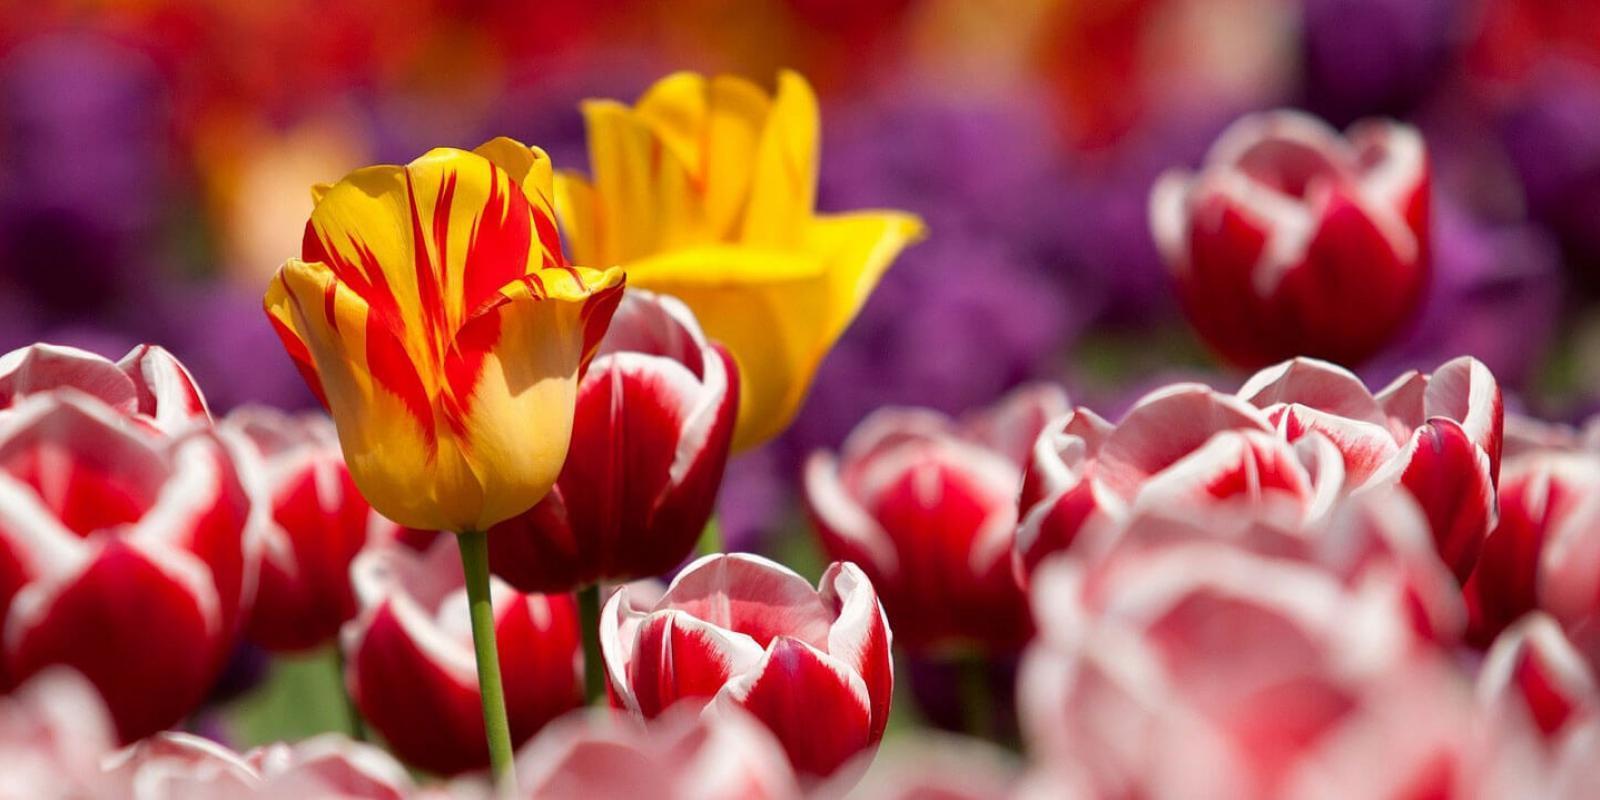 the most beautiful tulips from Kwekerij Borst Bloembollen